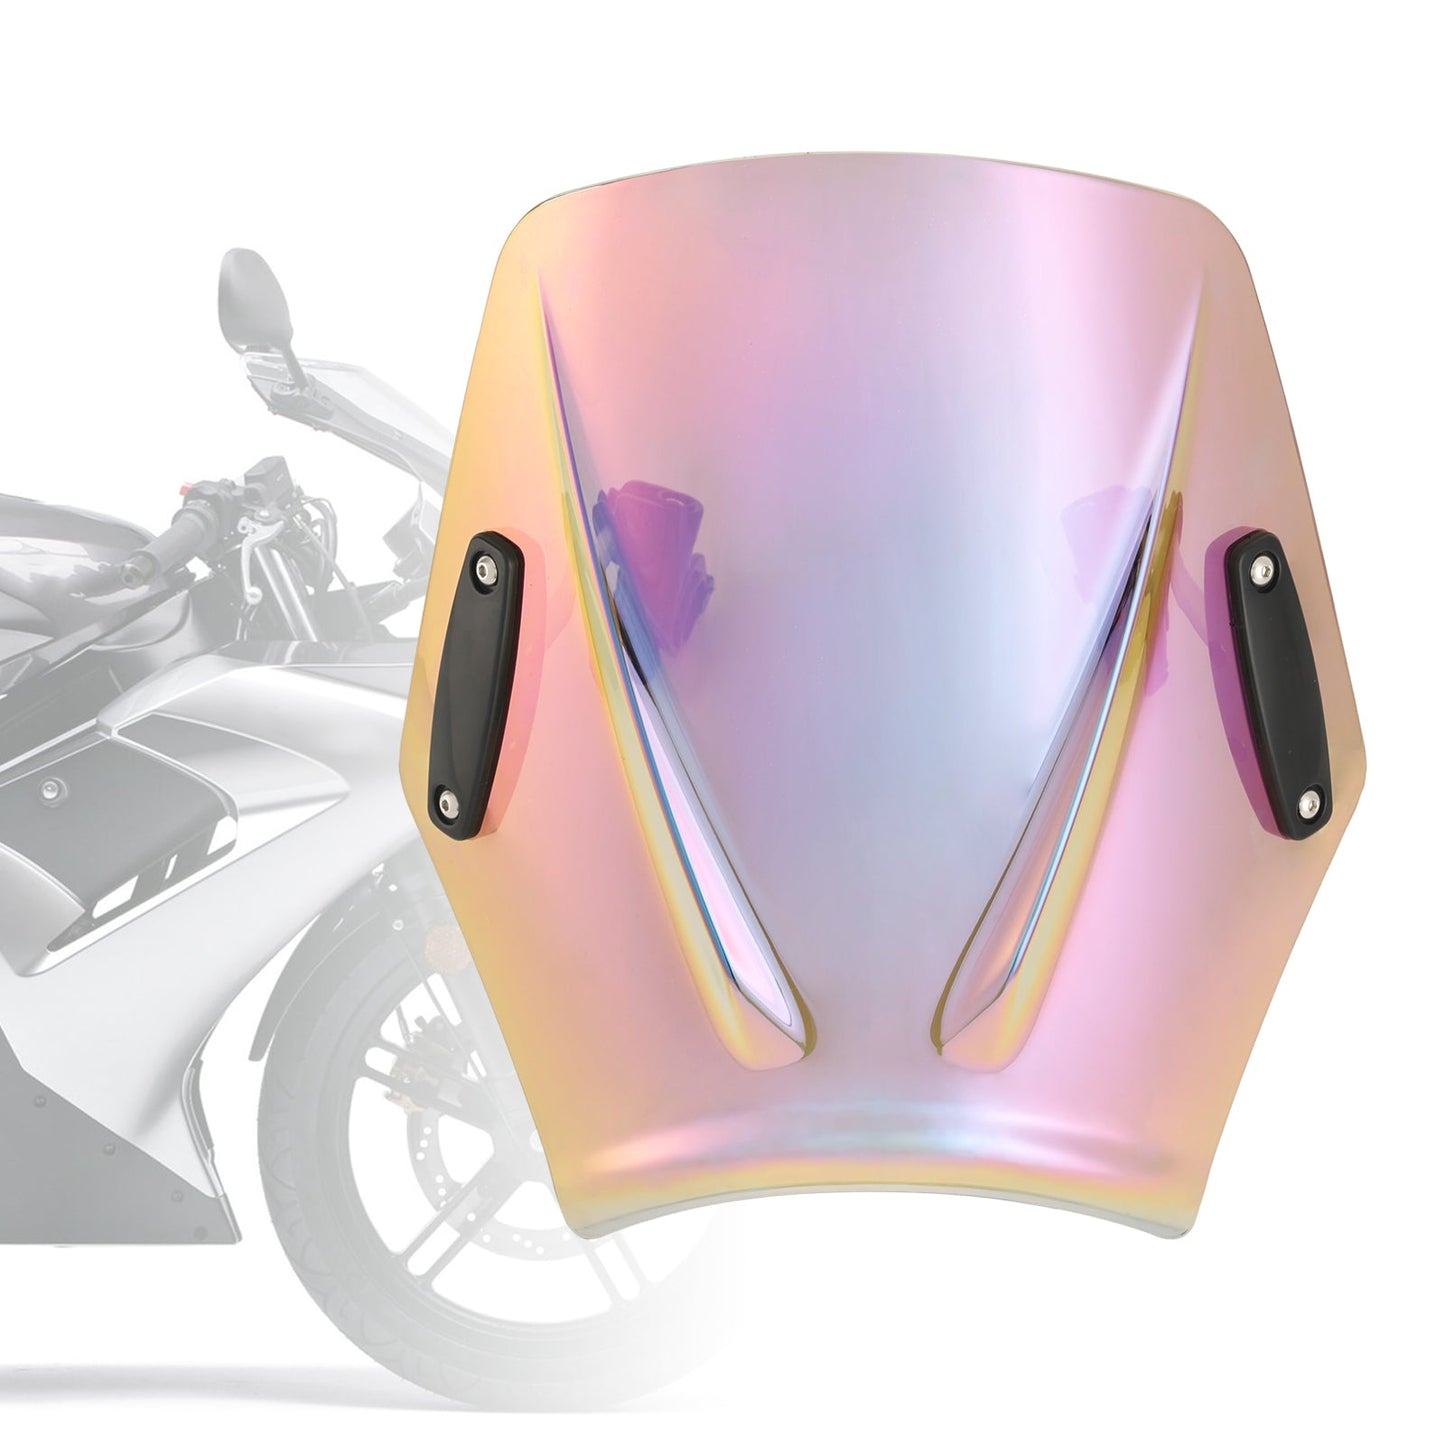 Motorcycle with 22mm / 7/8" handlebar Windshield WindScreen Universal